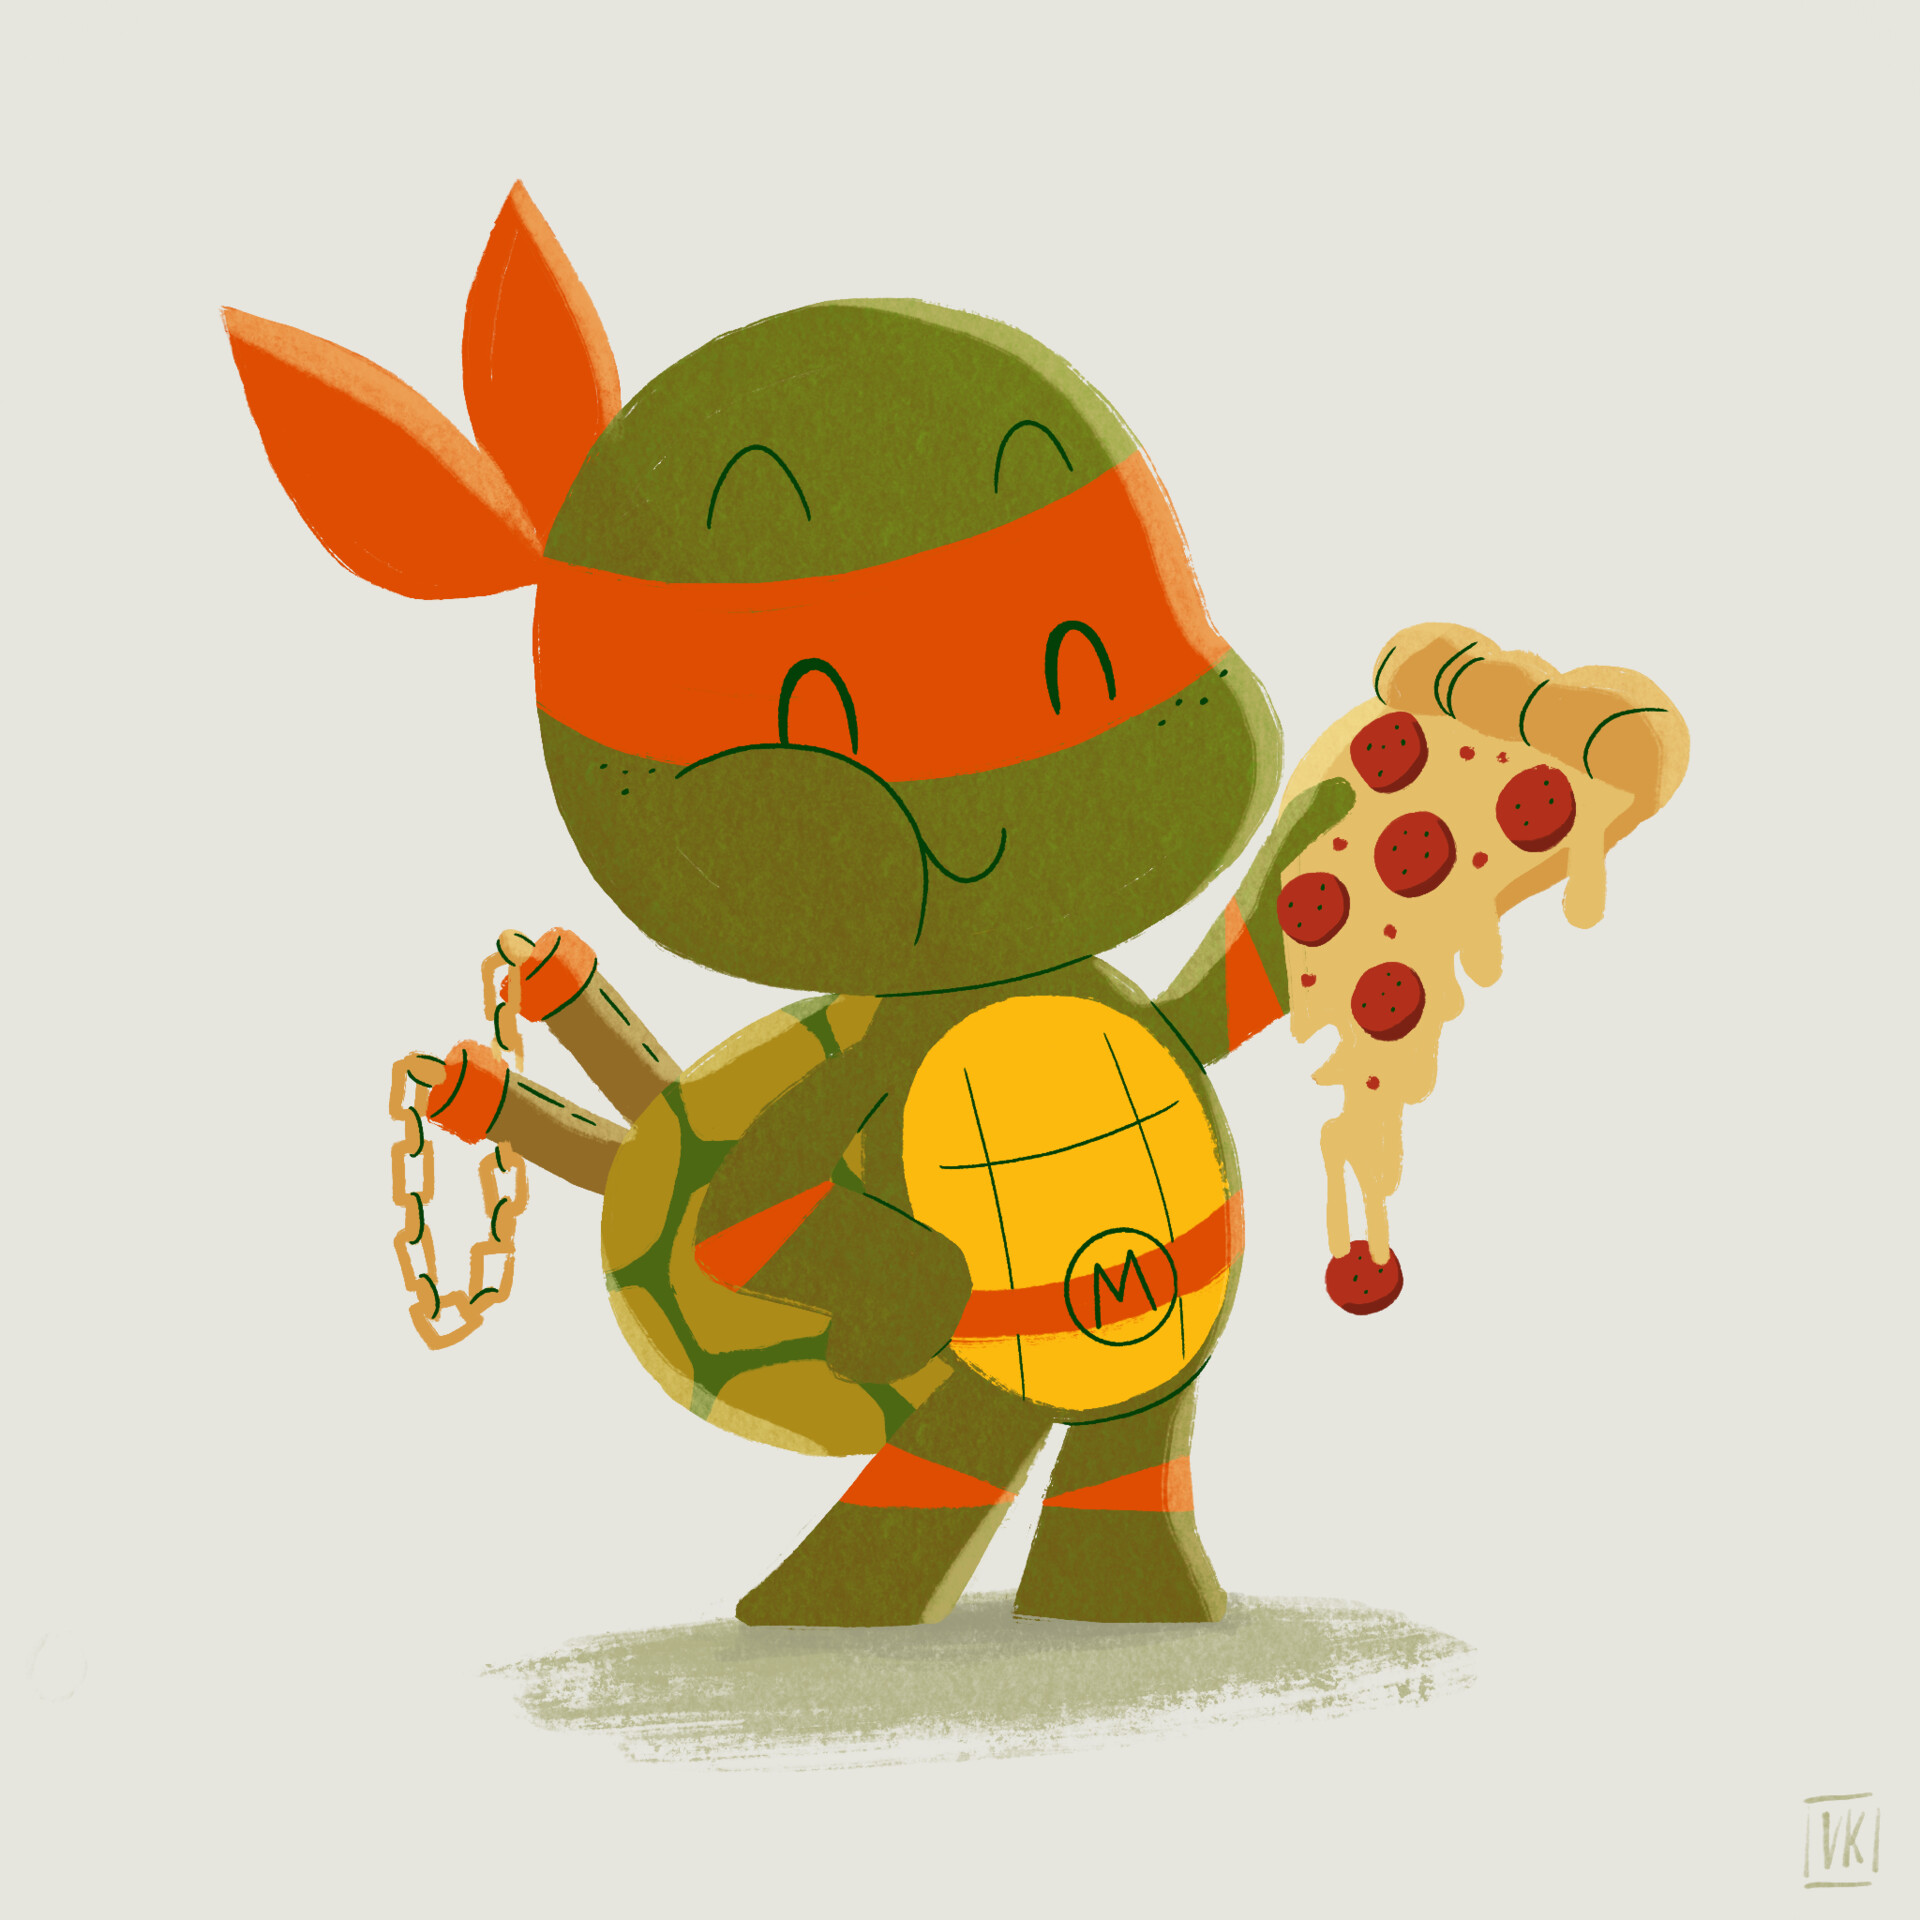 Baby Ninja turtles eating pizza | Poster